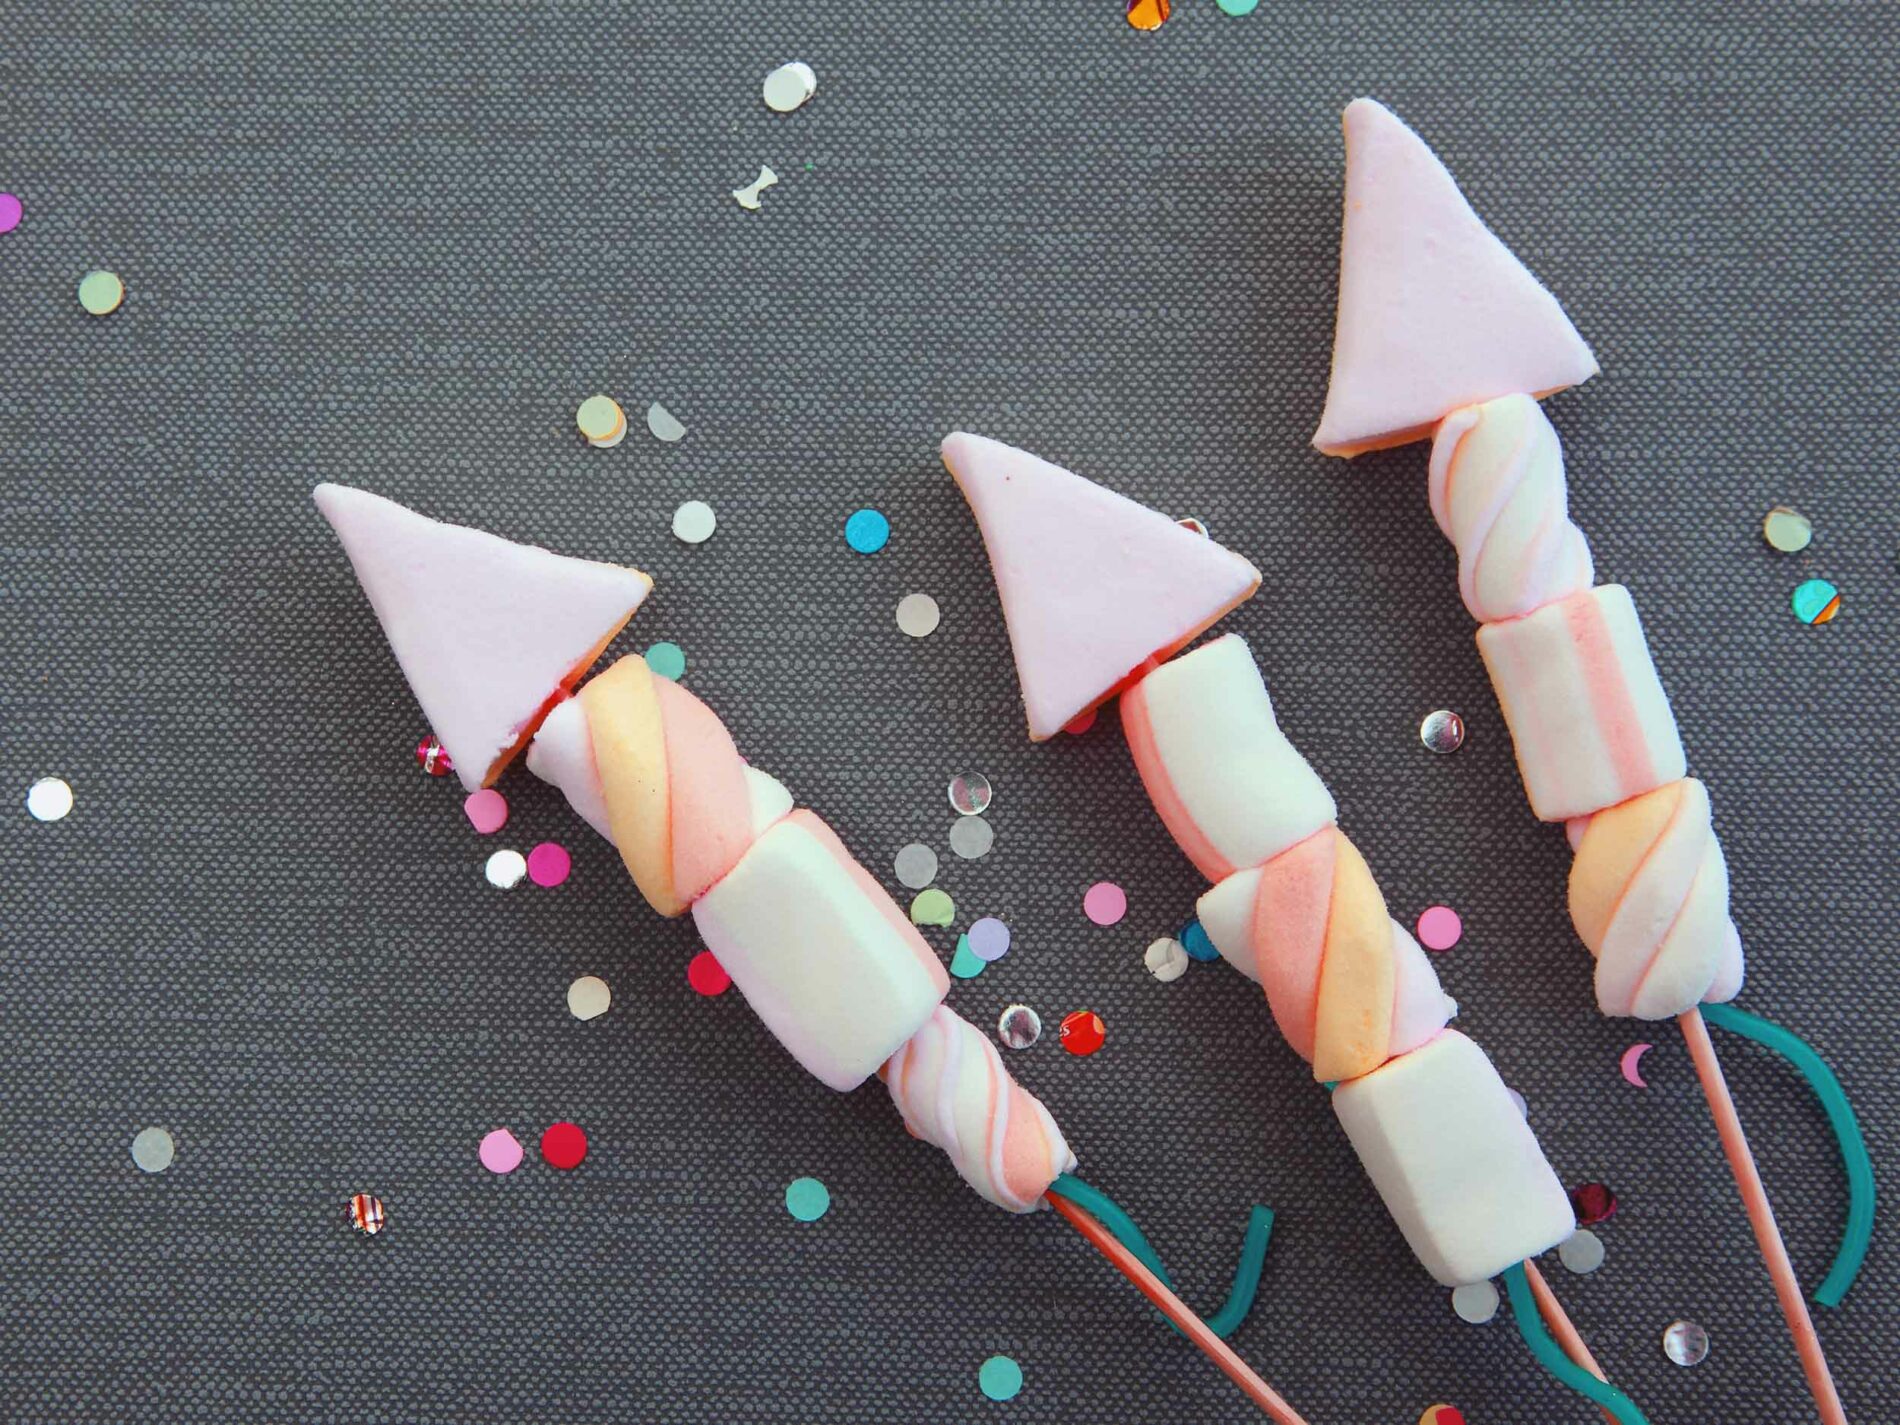 Marshmallow rockets